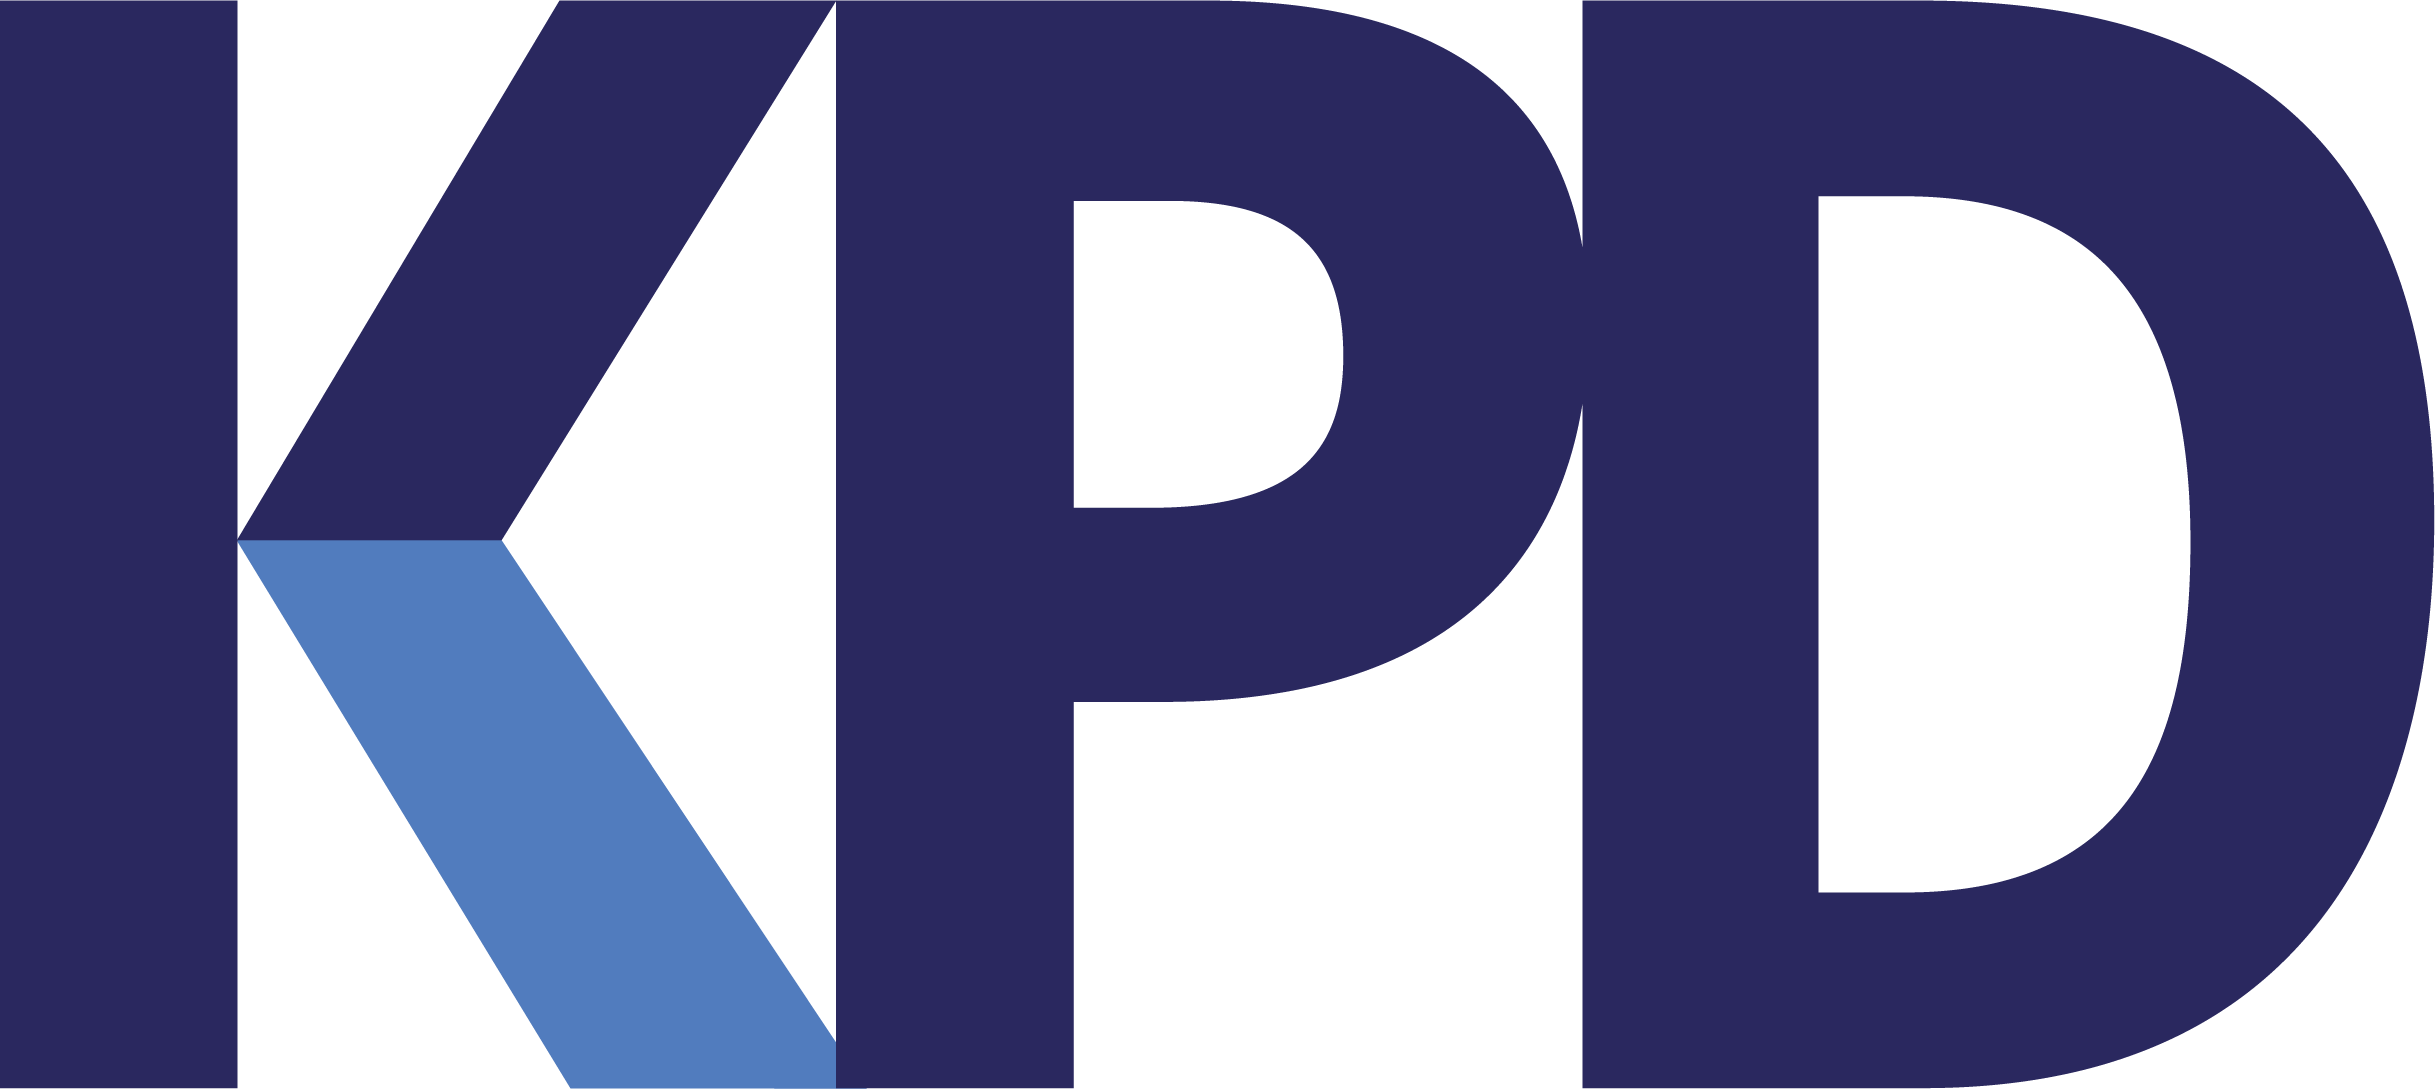 KPD_logo CMYK